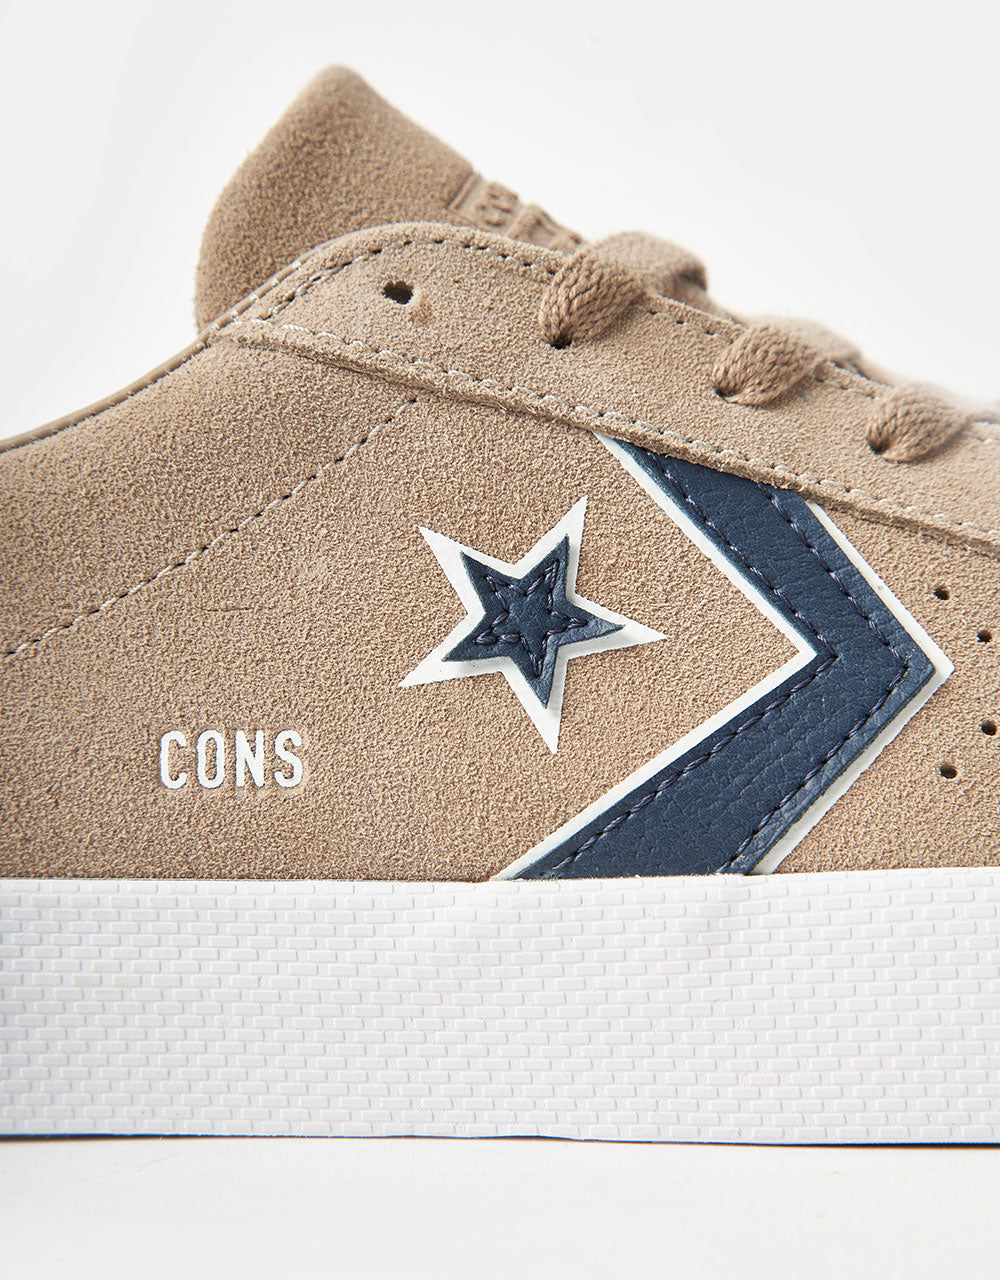 Converse Pro Leather Vulc Skate Shoes - Vintage Cargo/White/Navy